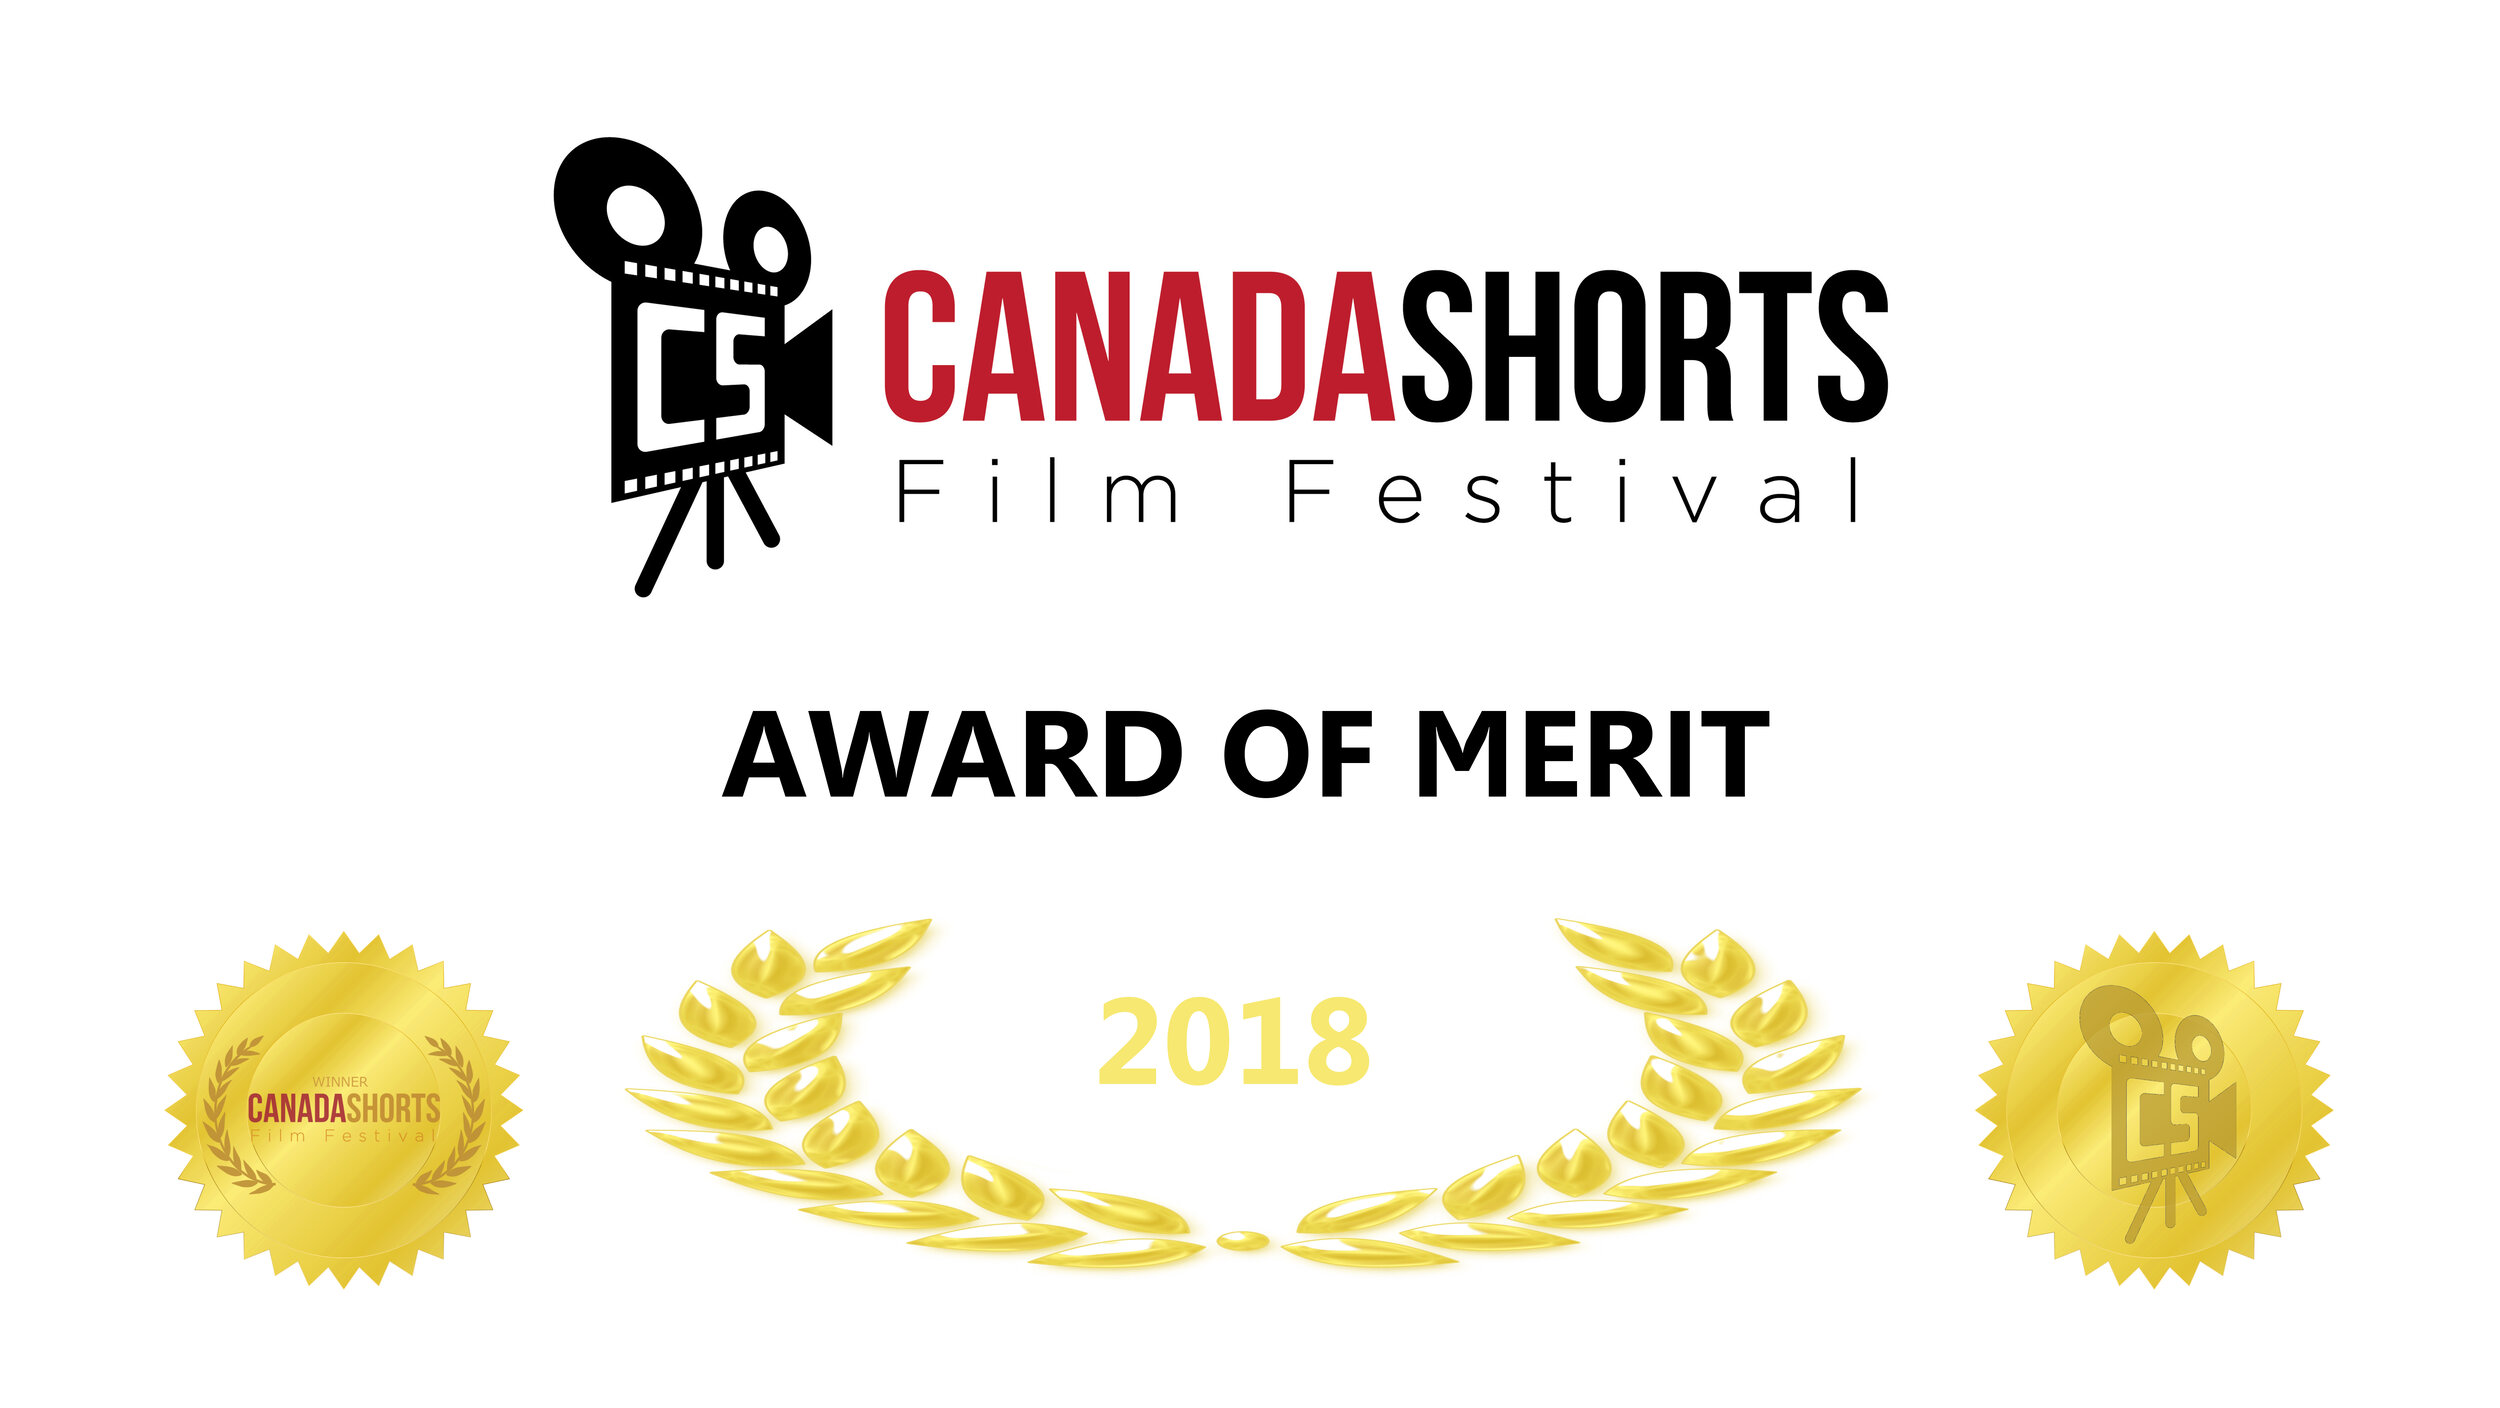 TRL_Canada Shorts 2018 award of merit certificate.jpg